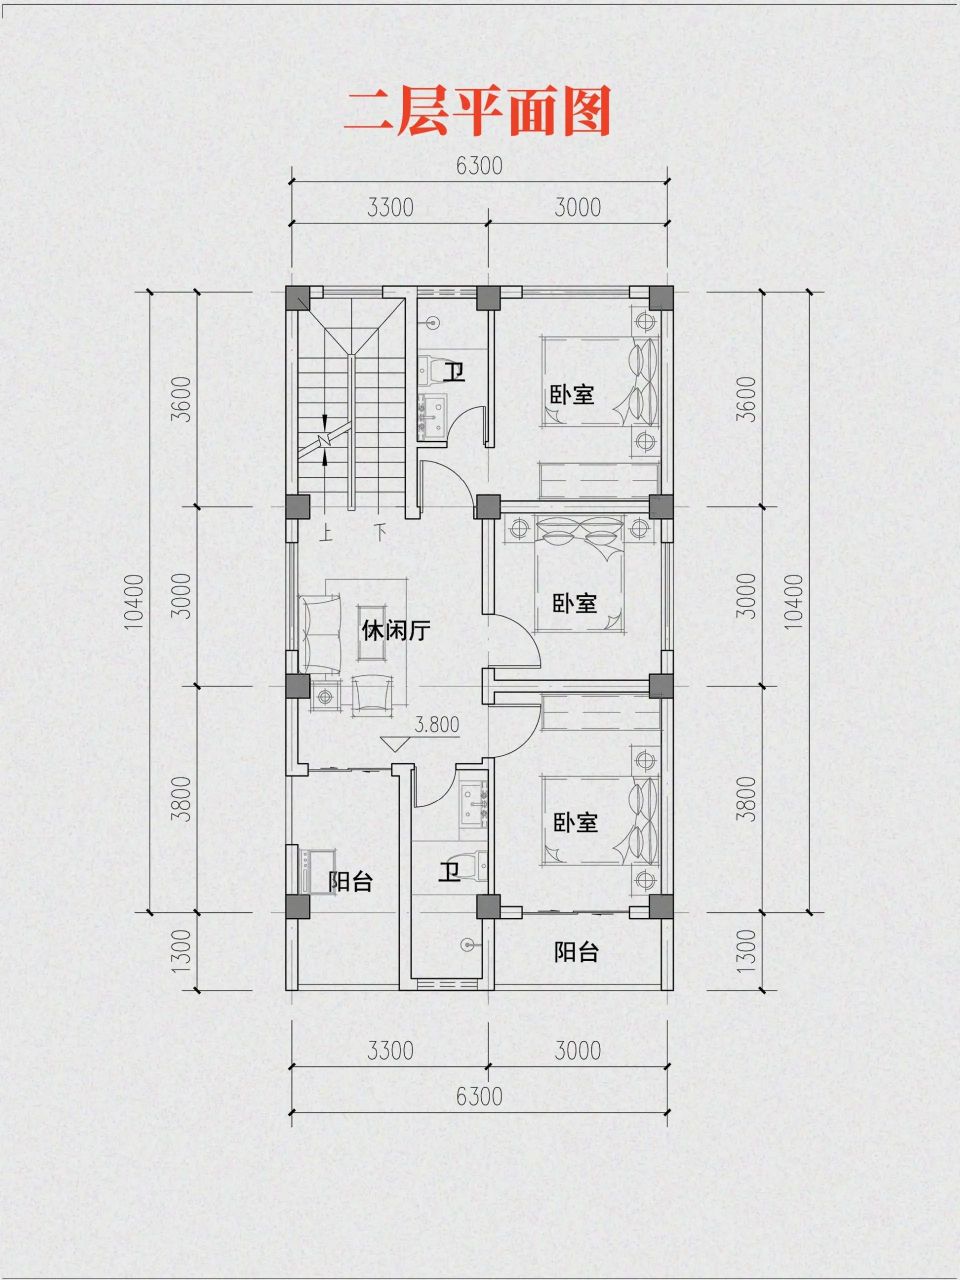 6x10米自建房设计图图片